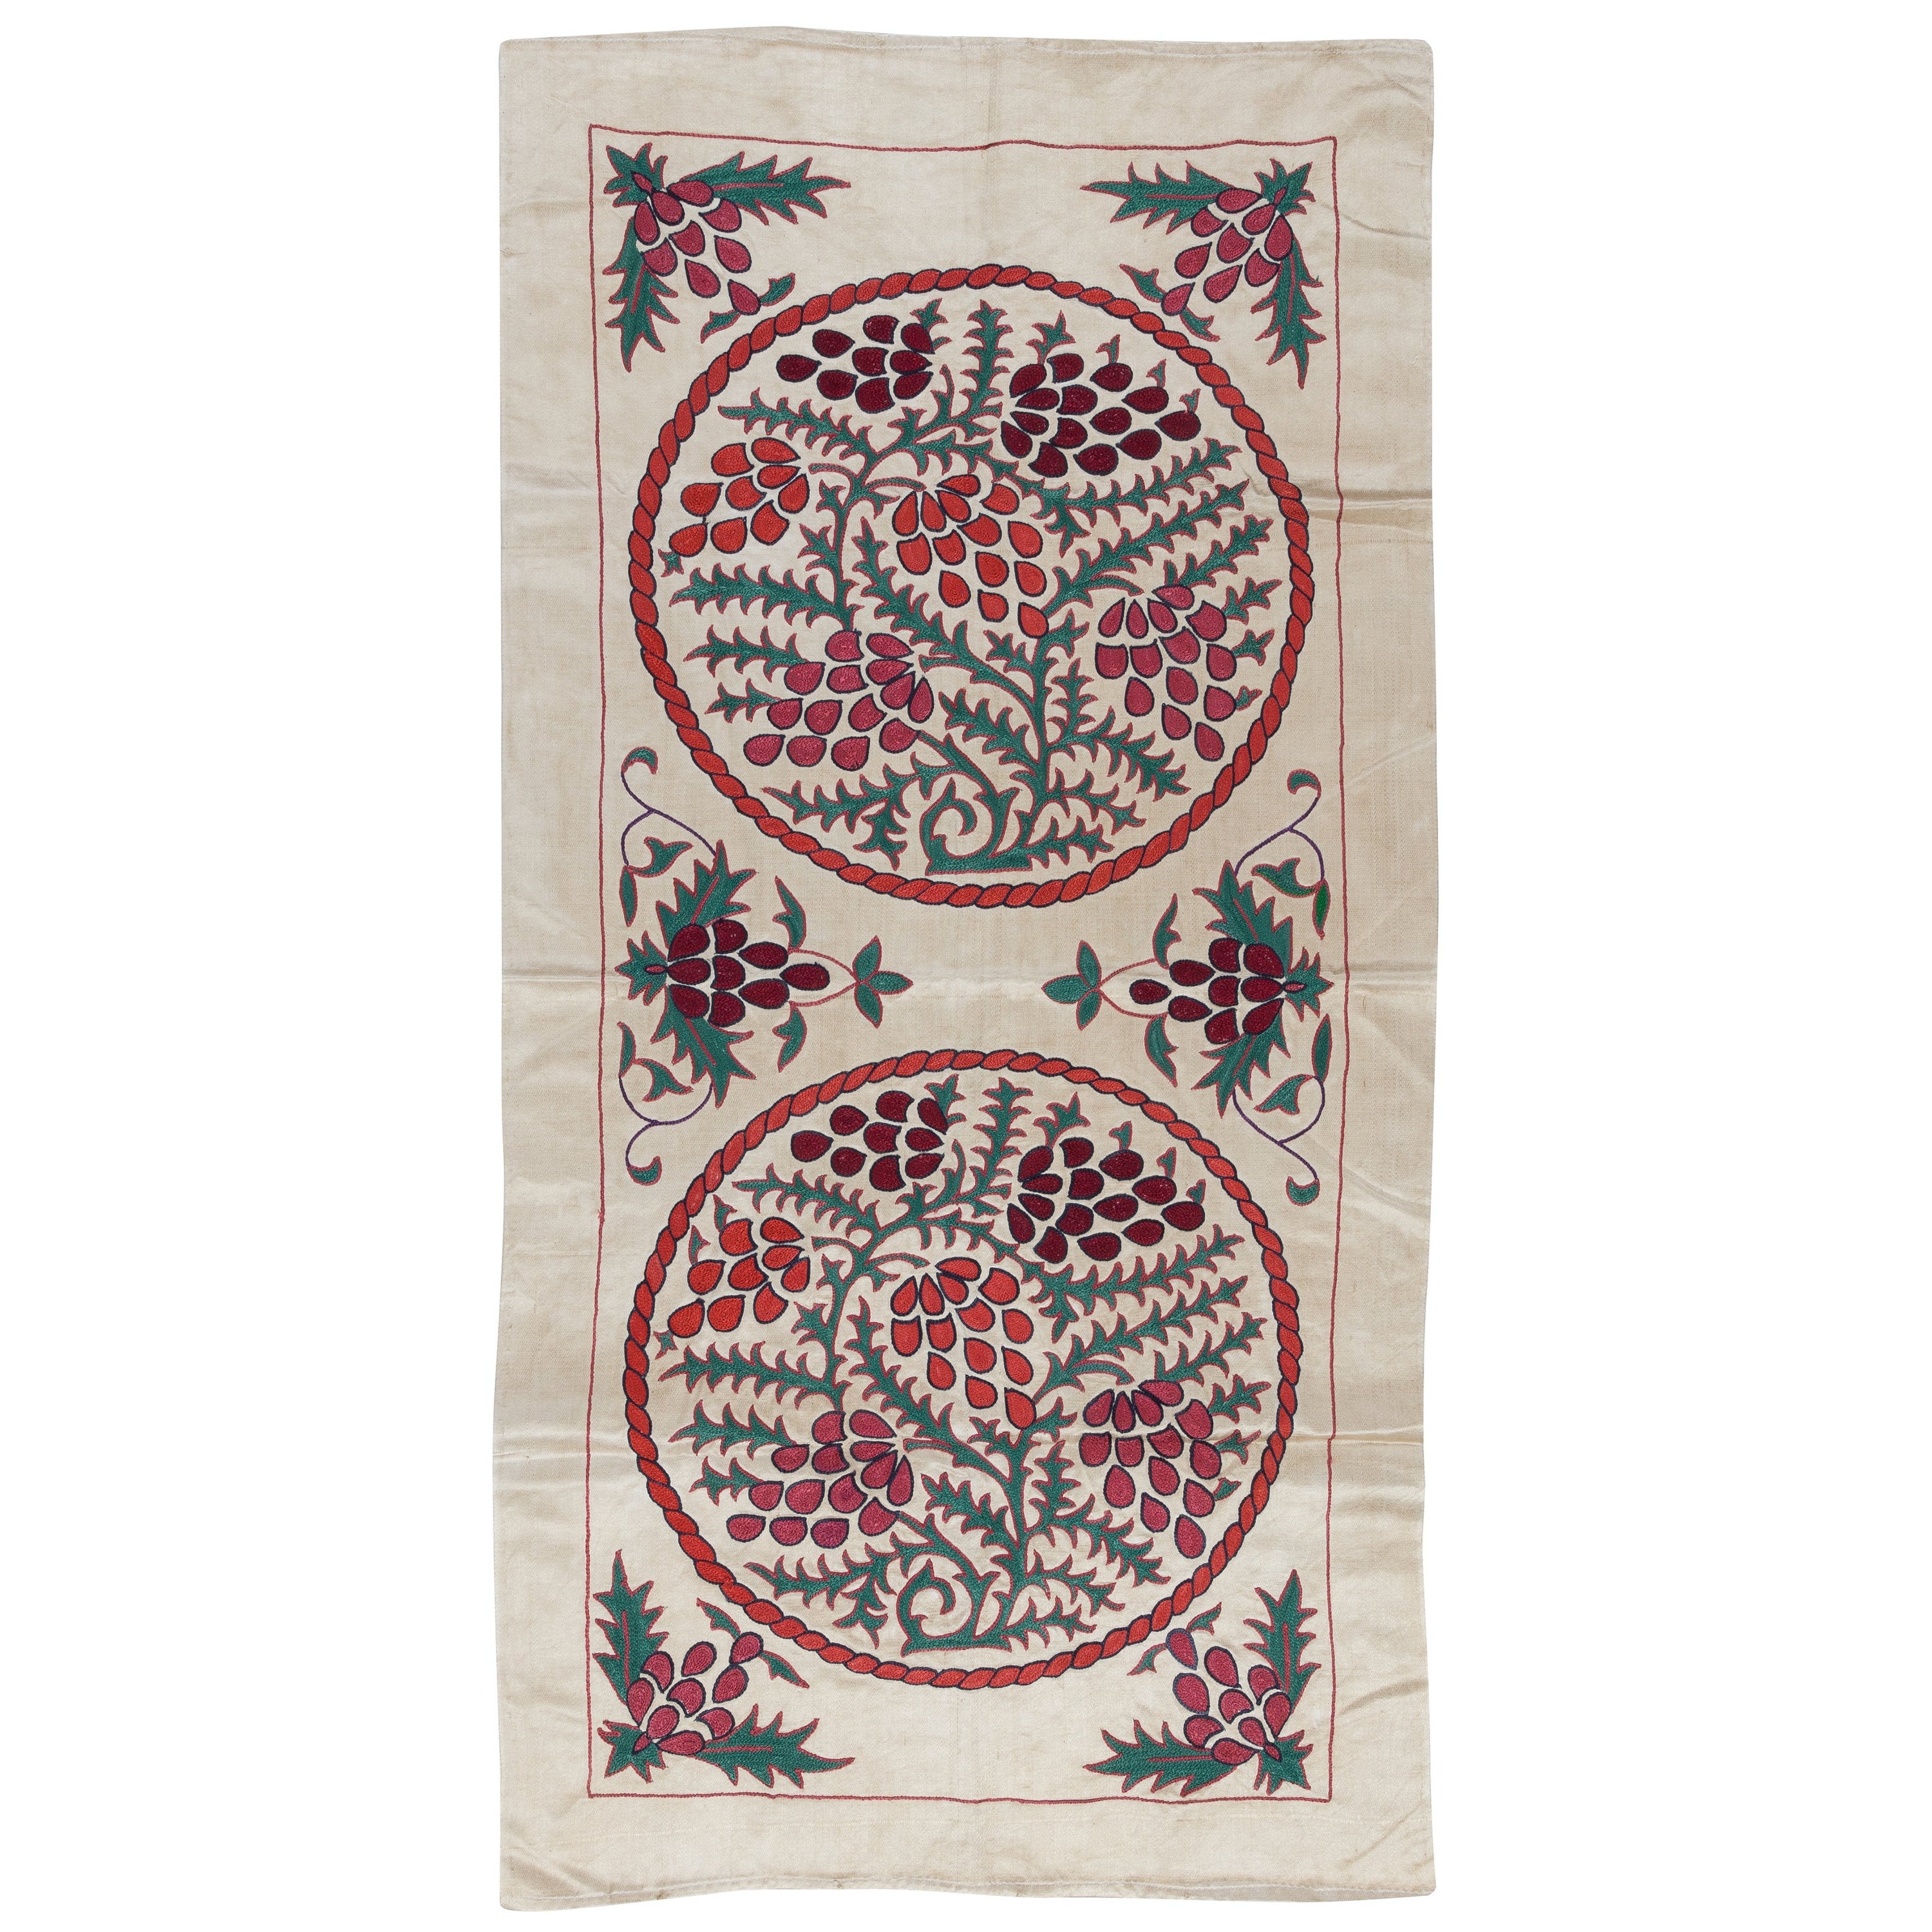 21"x42" Embroidered 100% Silk Wall Hanging, Suzani Wall Decor, Uzbek Tablecloth For Sale